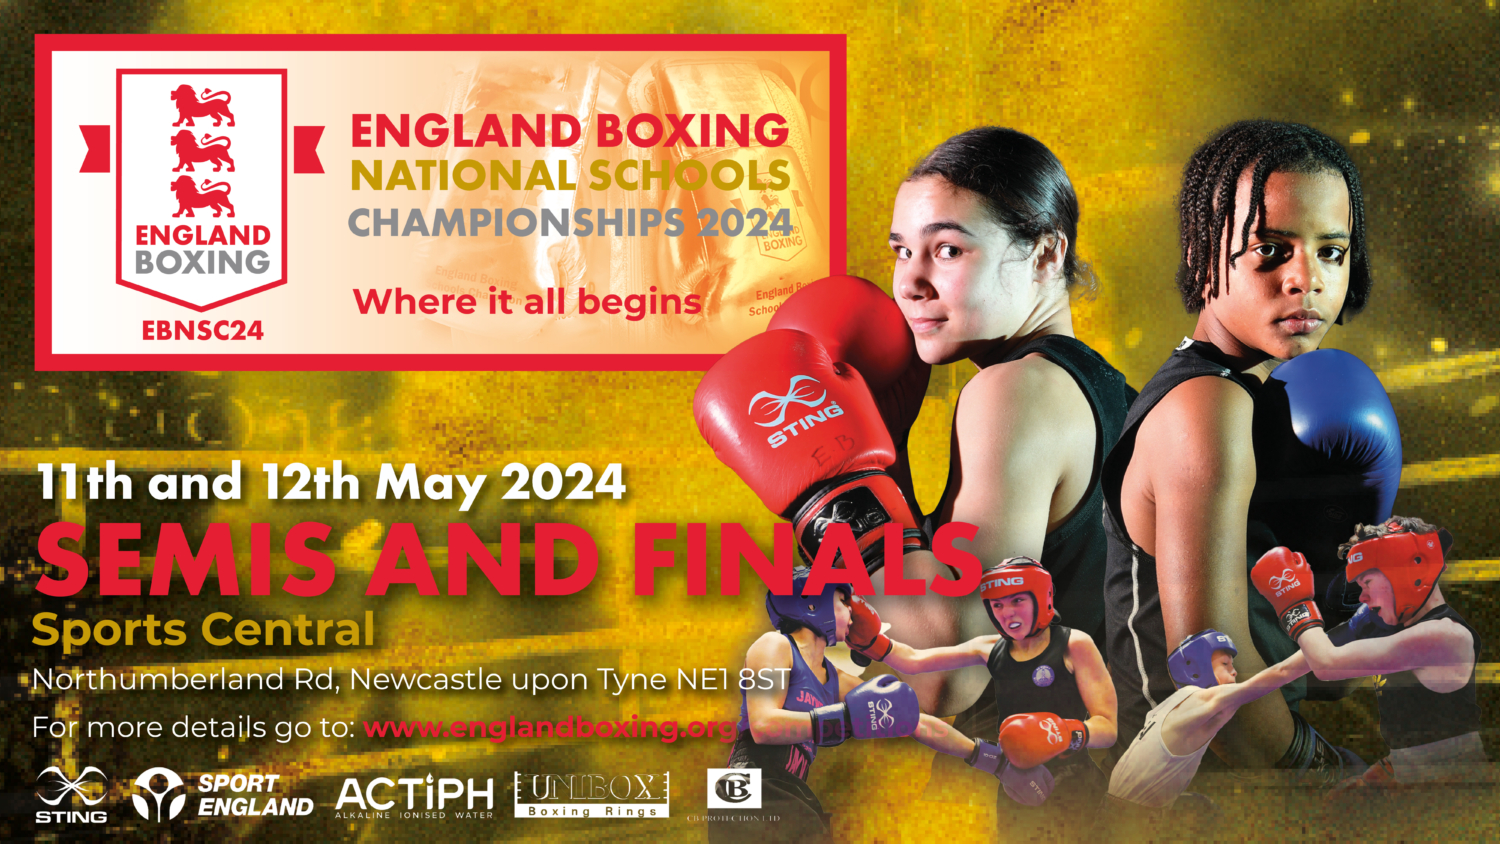 England Boxing National Schools Championships - England Boxing